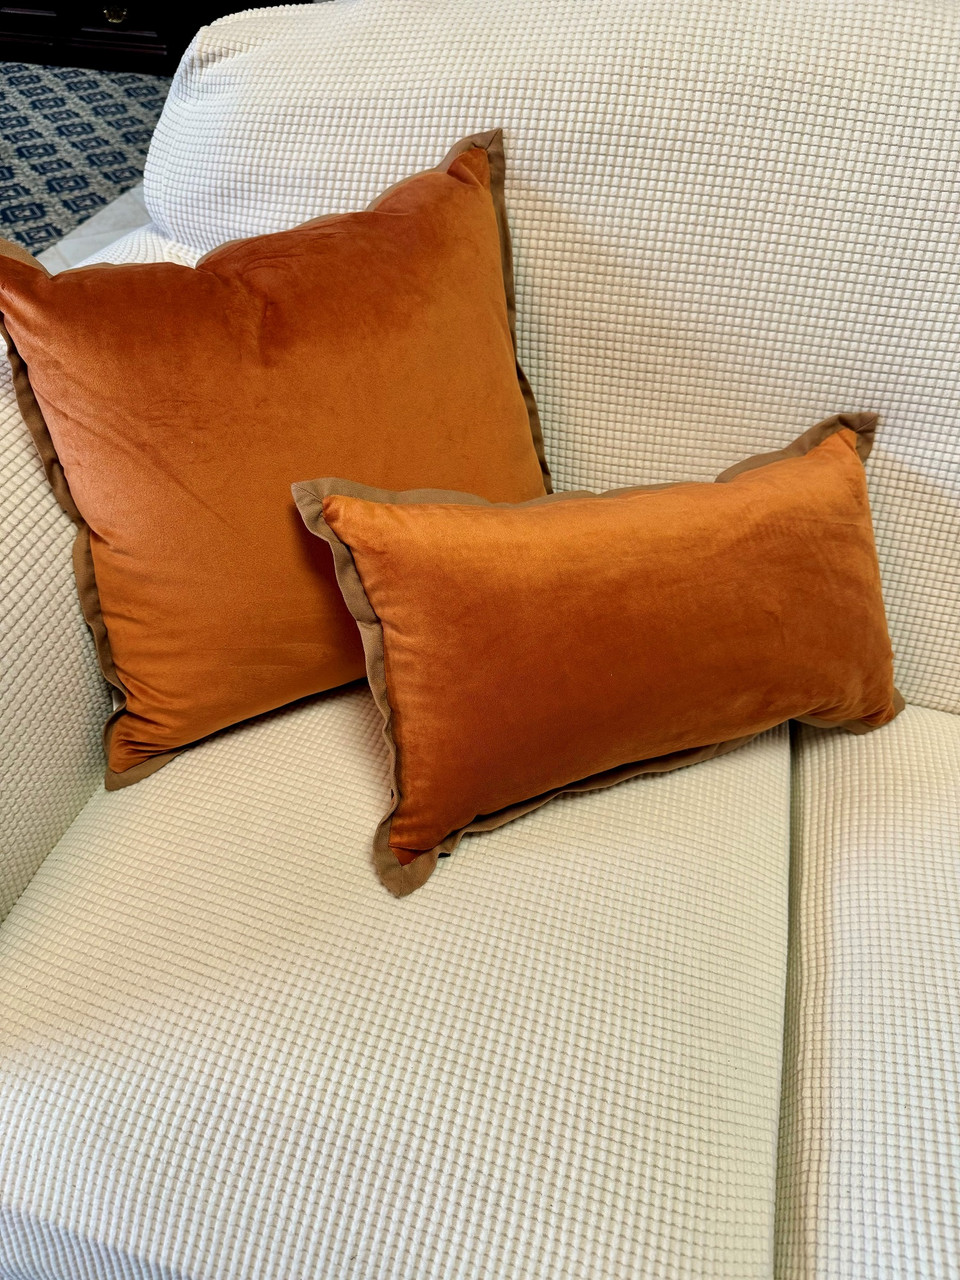 Indoor Velvet Flange Loden Green 18-Inch Throw Pillow - Pillow Perfect